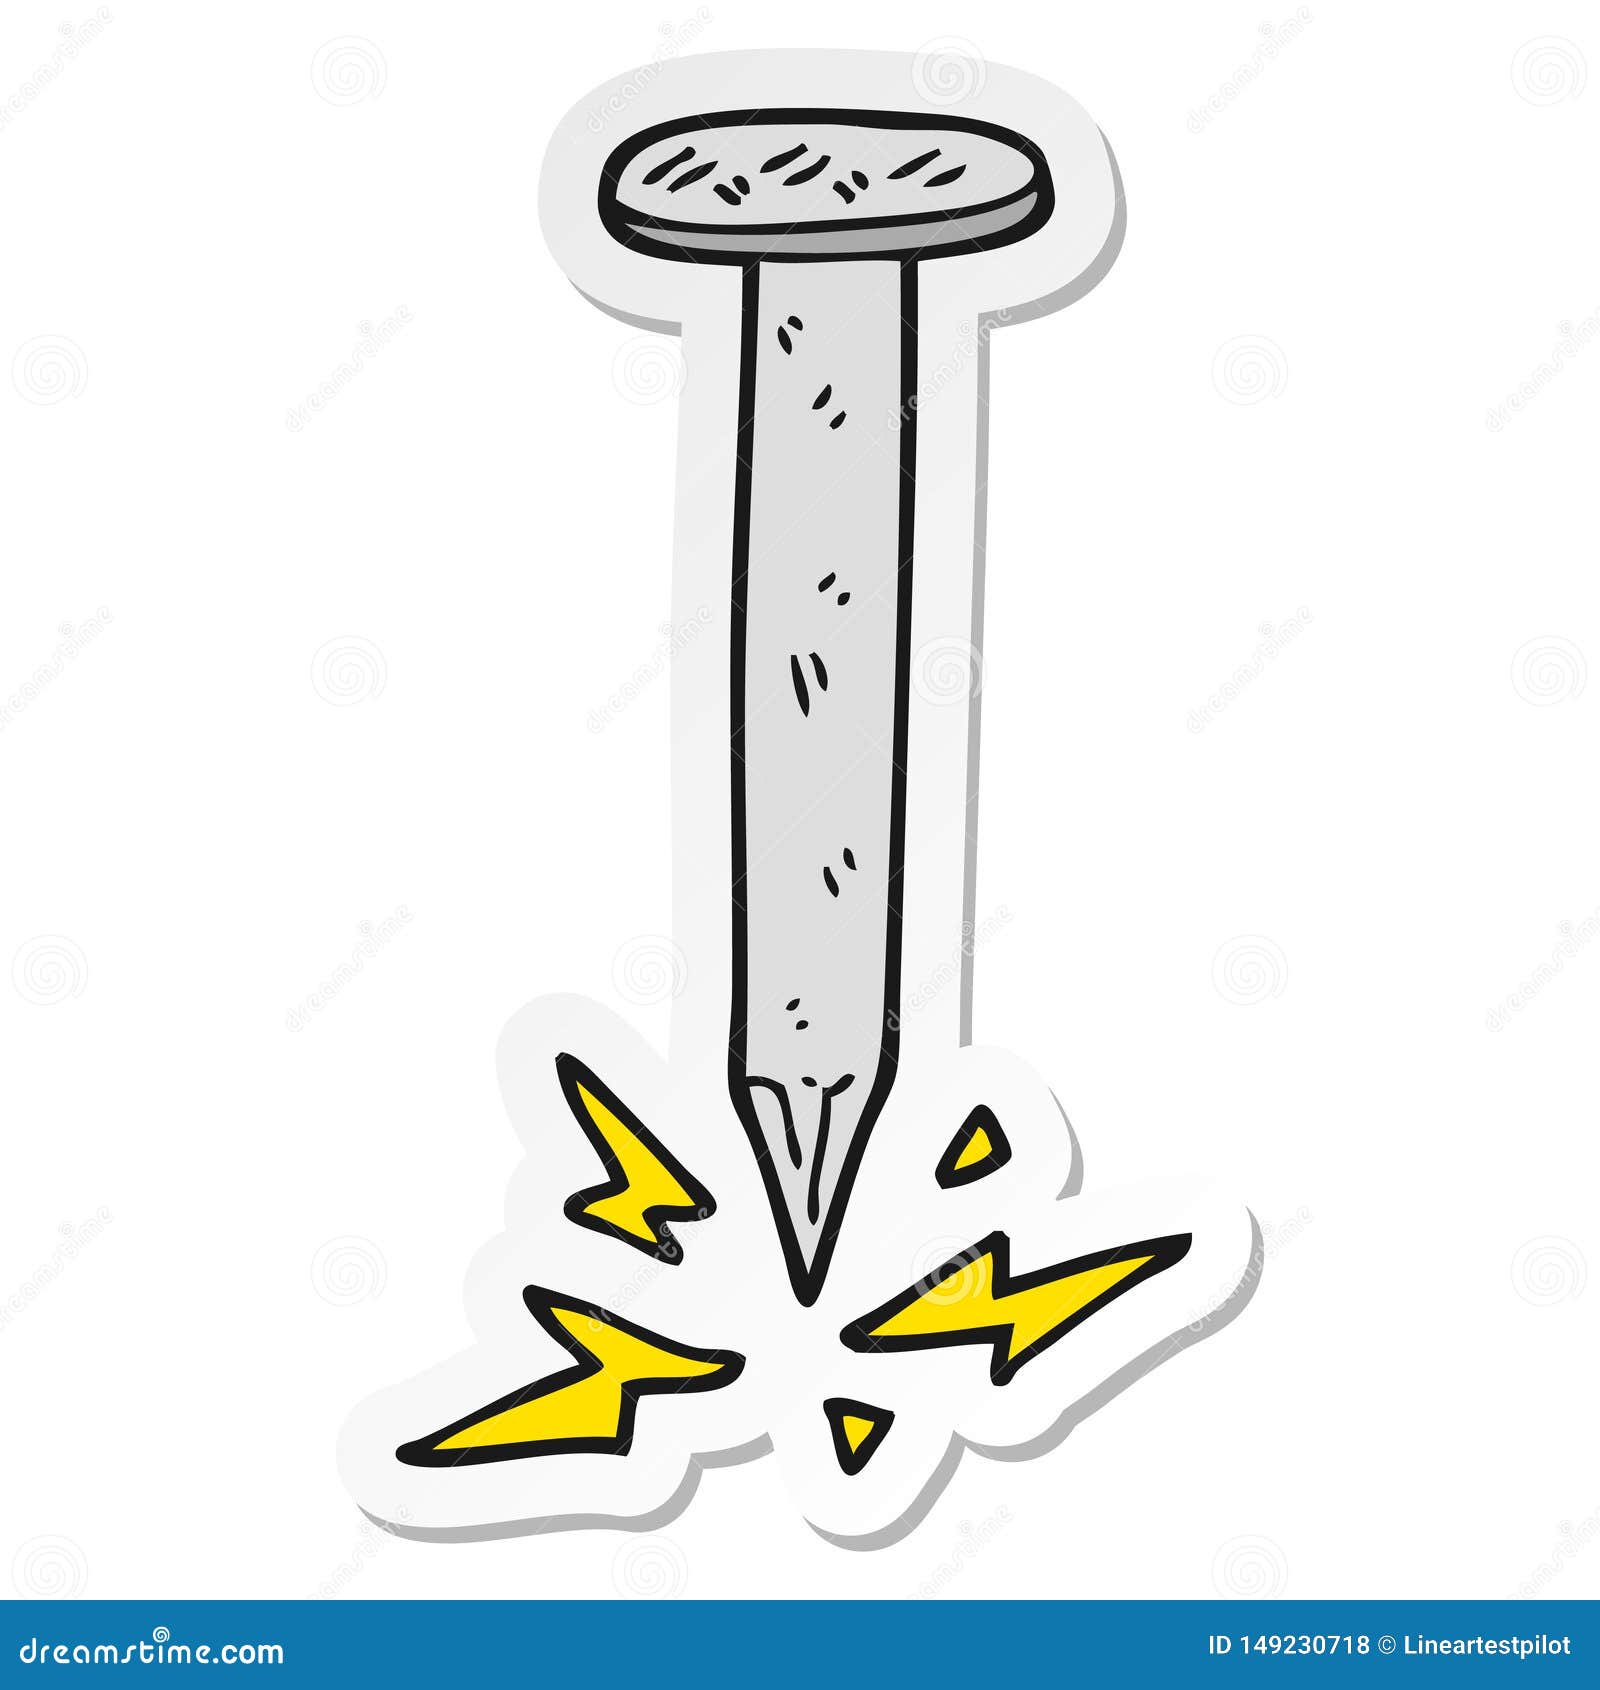 Sticker of a Cartoon Struck Nail Stock Vector - Illustration of crazy ...